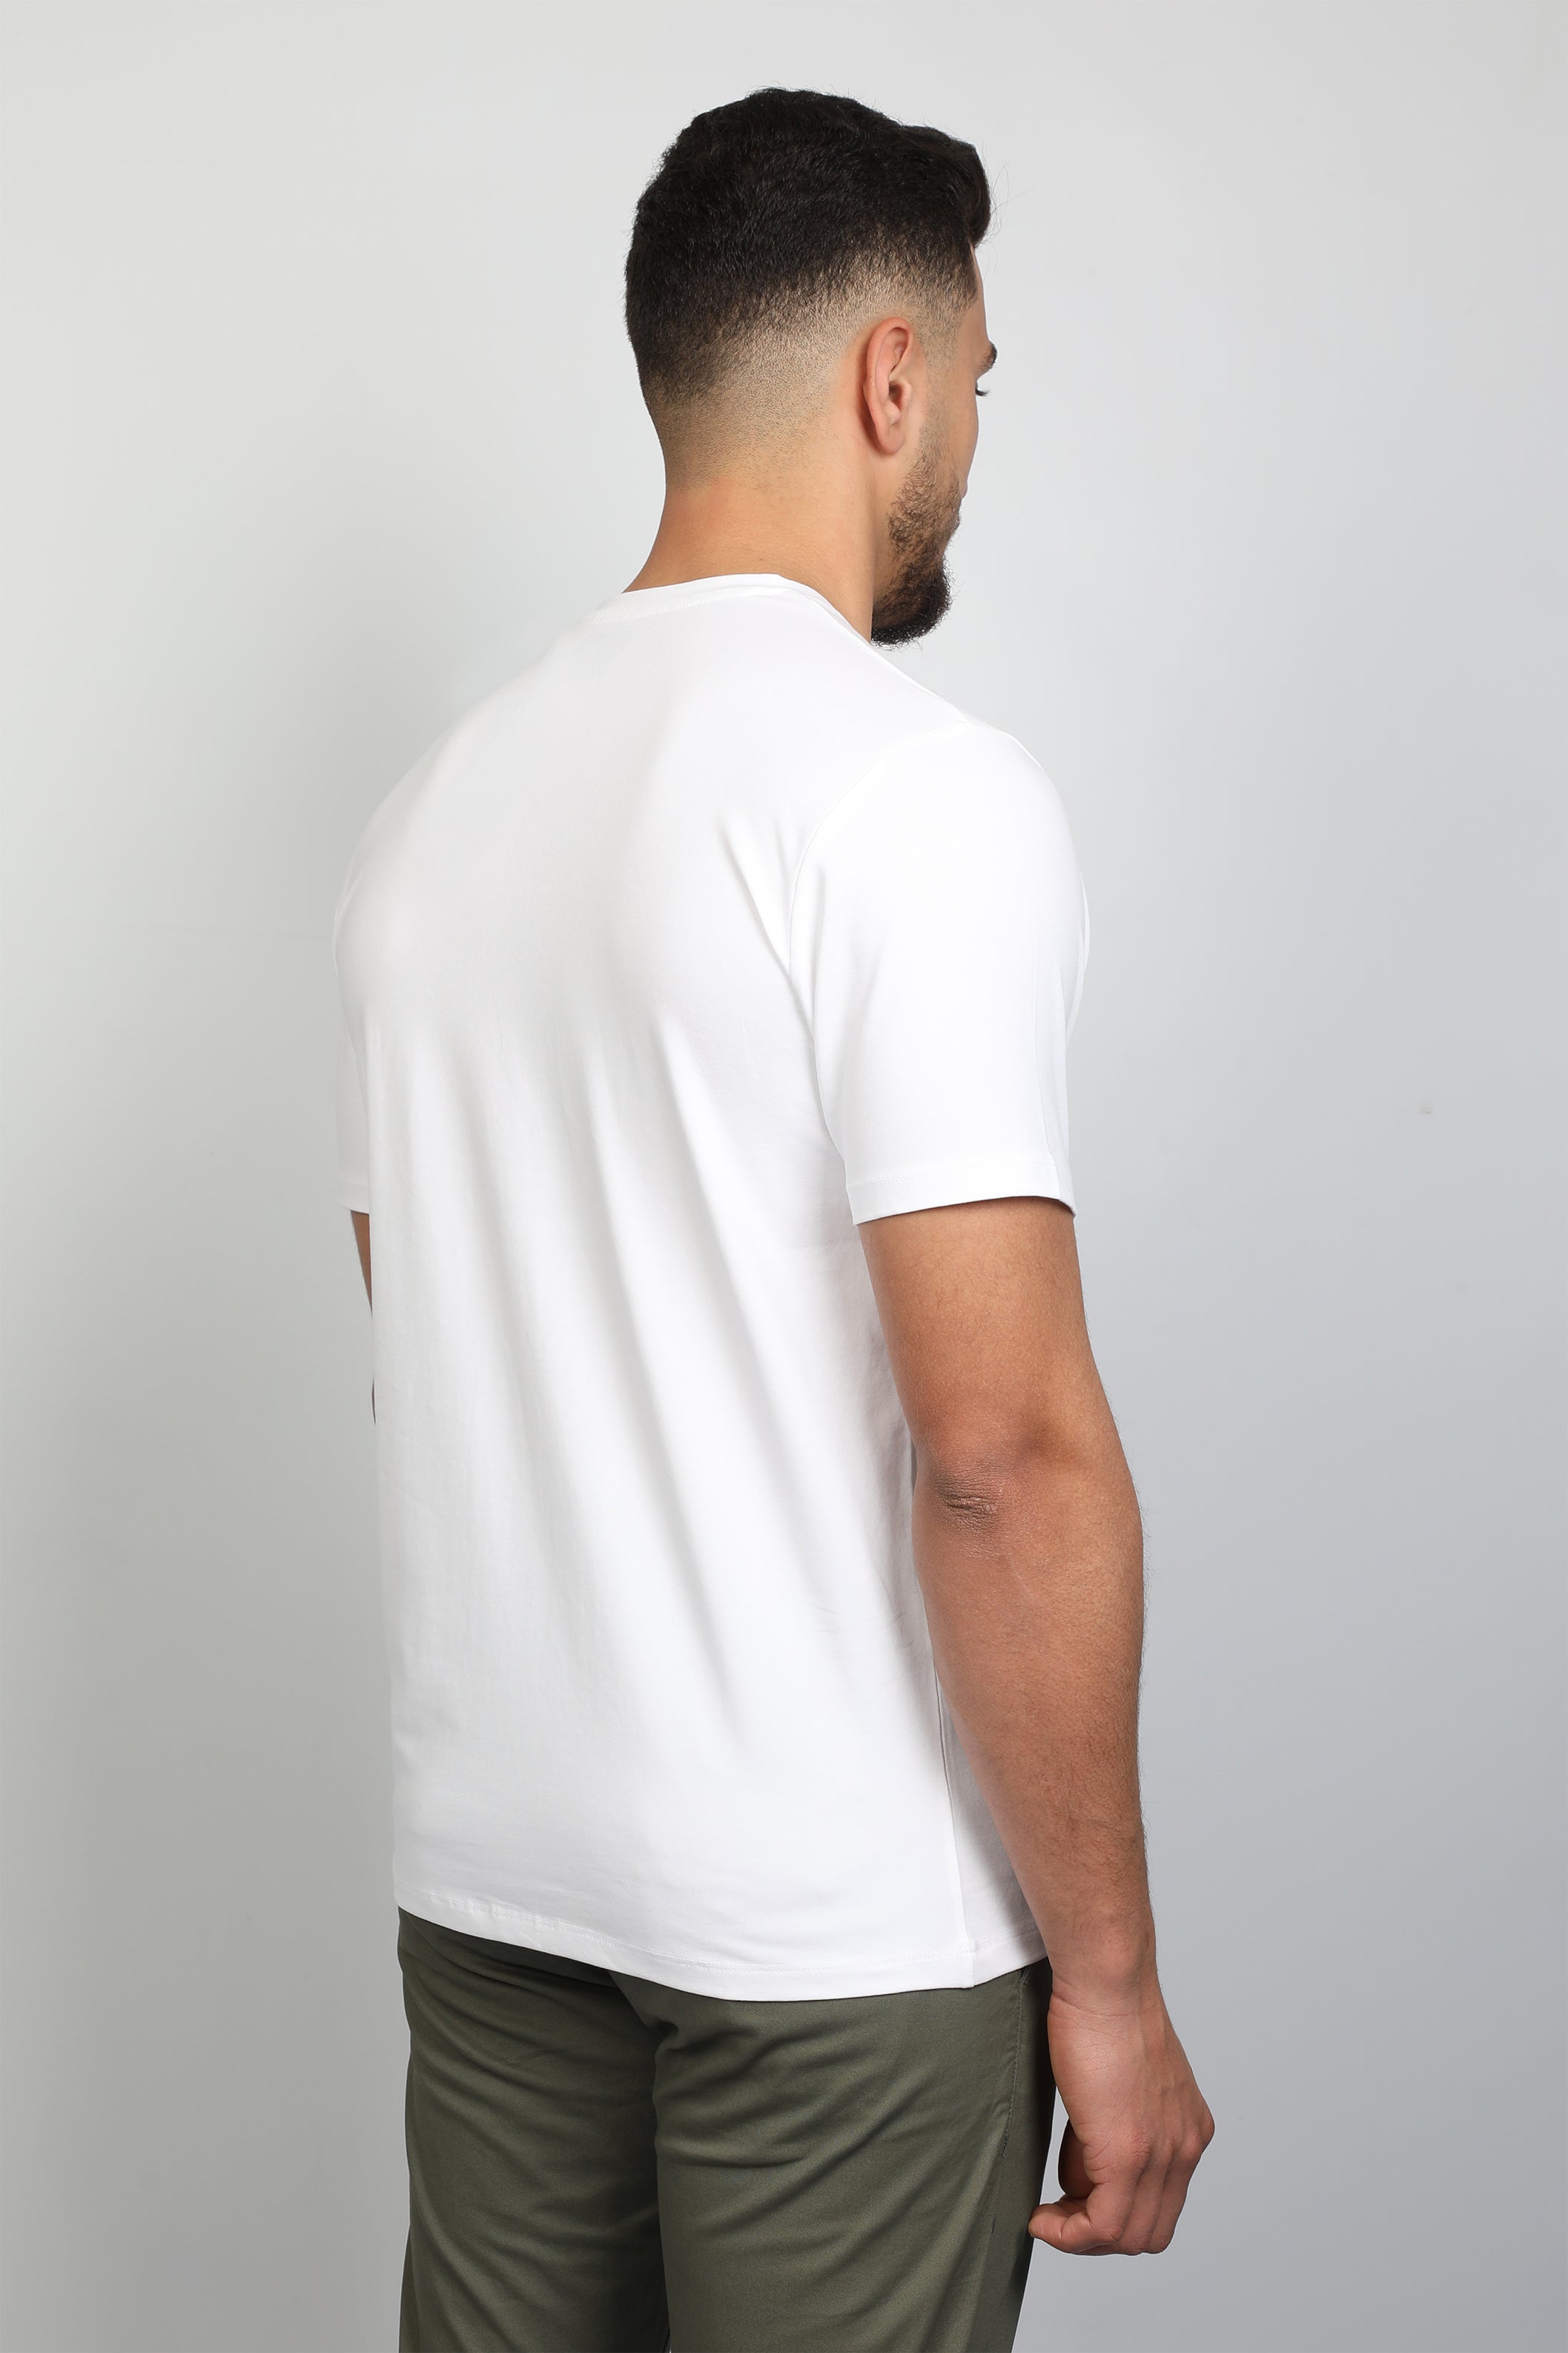 T-shirt White ' Just An Imagination' Front Design